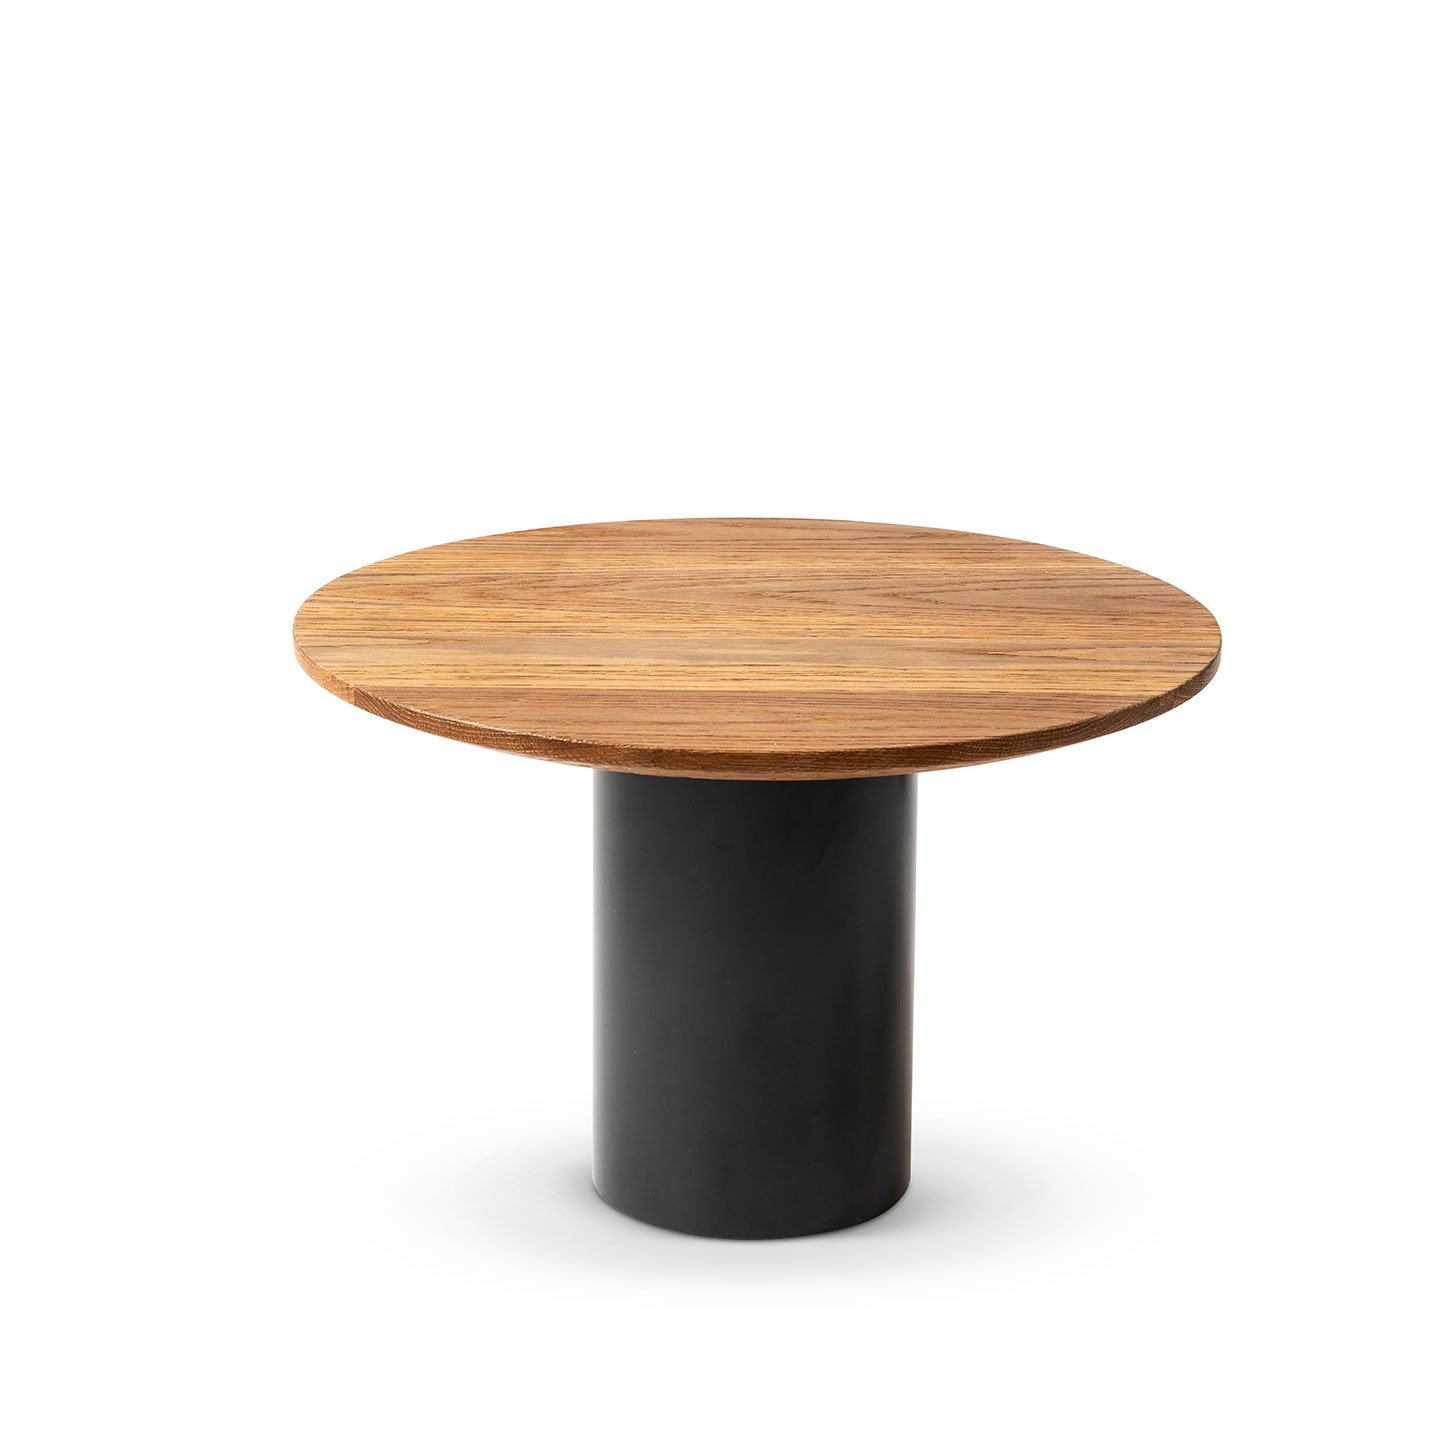 Mush边桌配有坚固的圆柱形底座和纤细的圆形桌面，以模仿蘑菇形状，巧妙玩转比例，可在任何环境中呈现出生动趣意的对比效果。